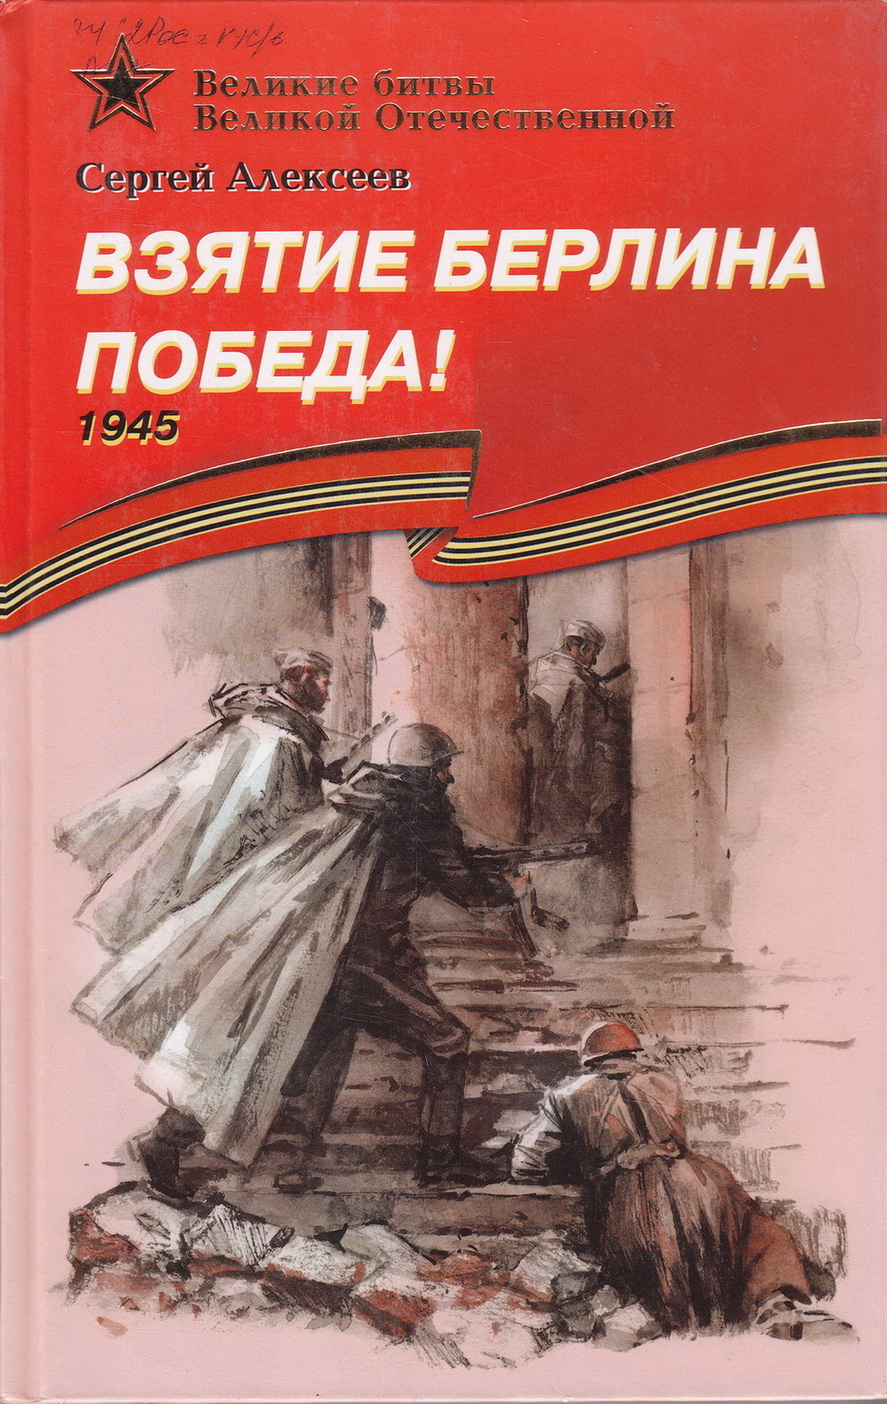 Нажмите для увеличения. Алексеев С. П. Взятие Берлина. Победа! 1945 (Фото книги из фонда библиотеки) 